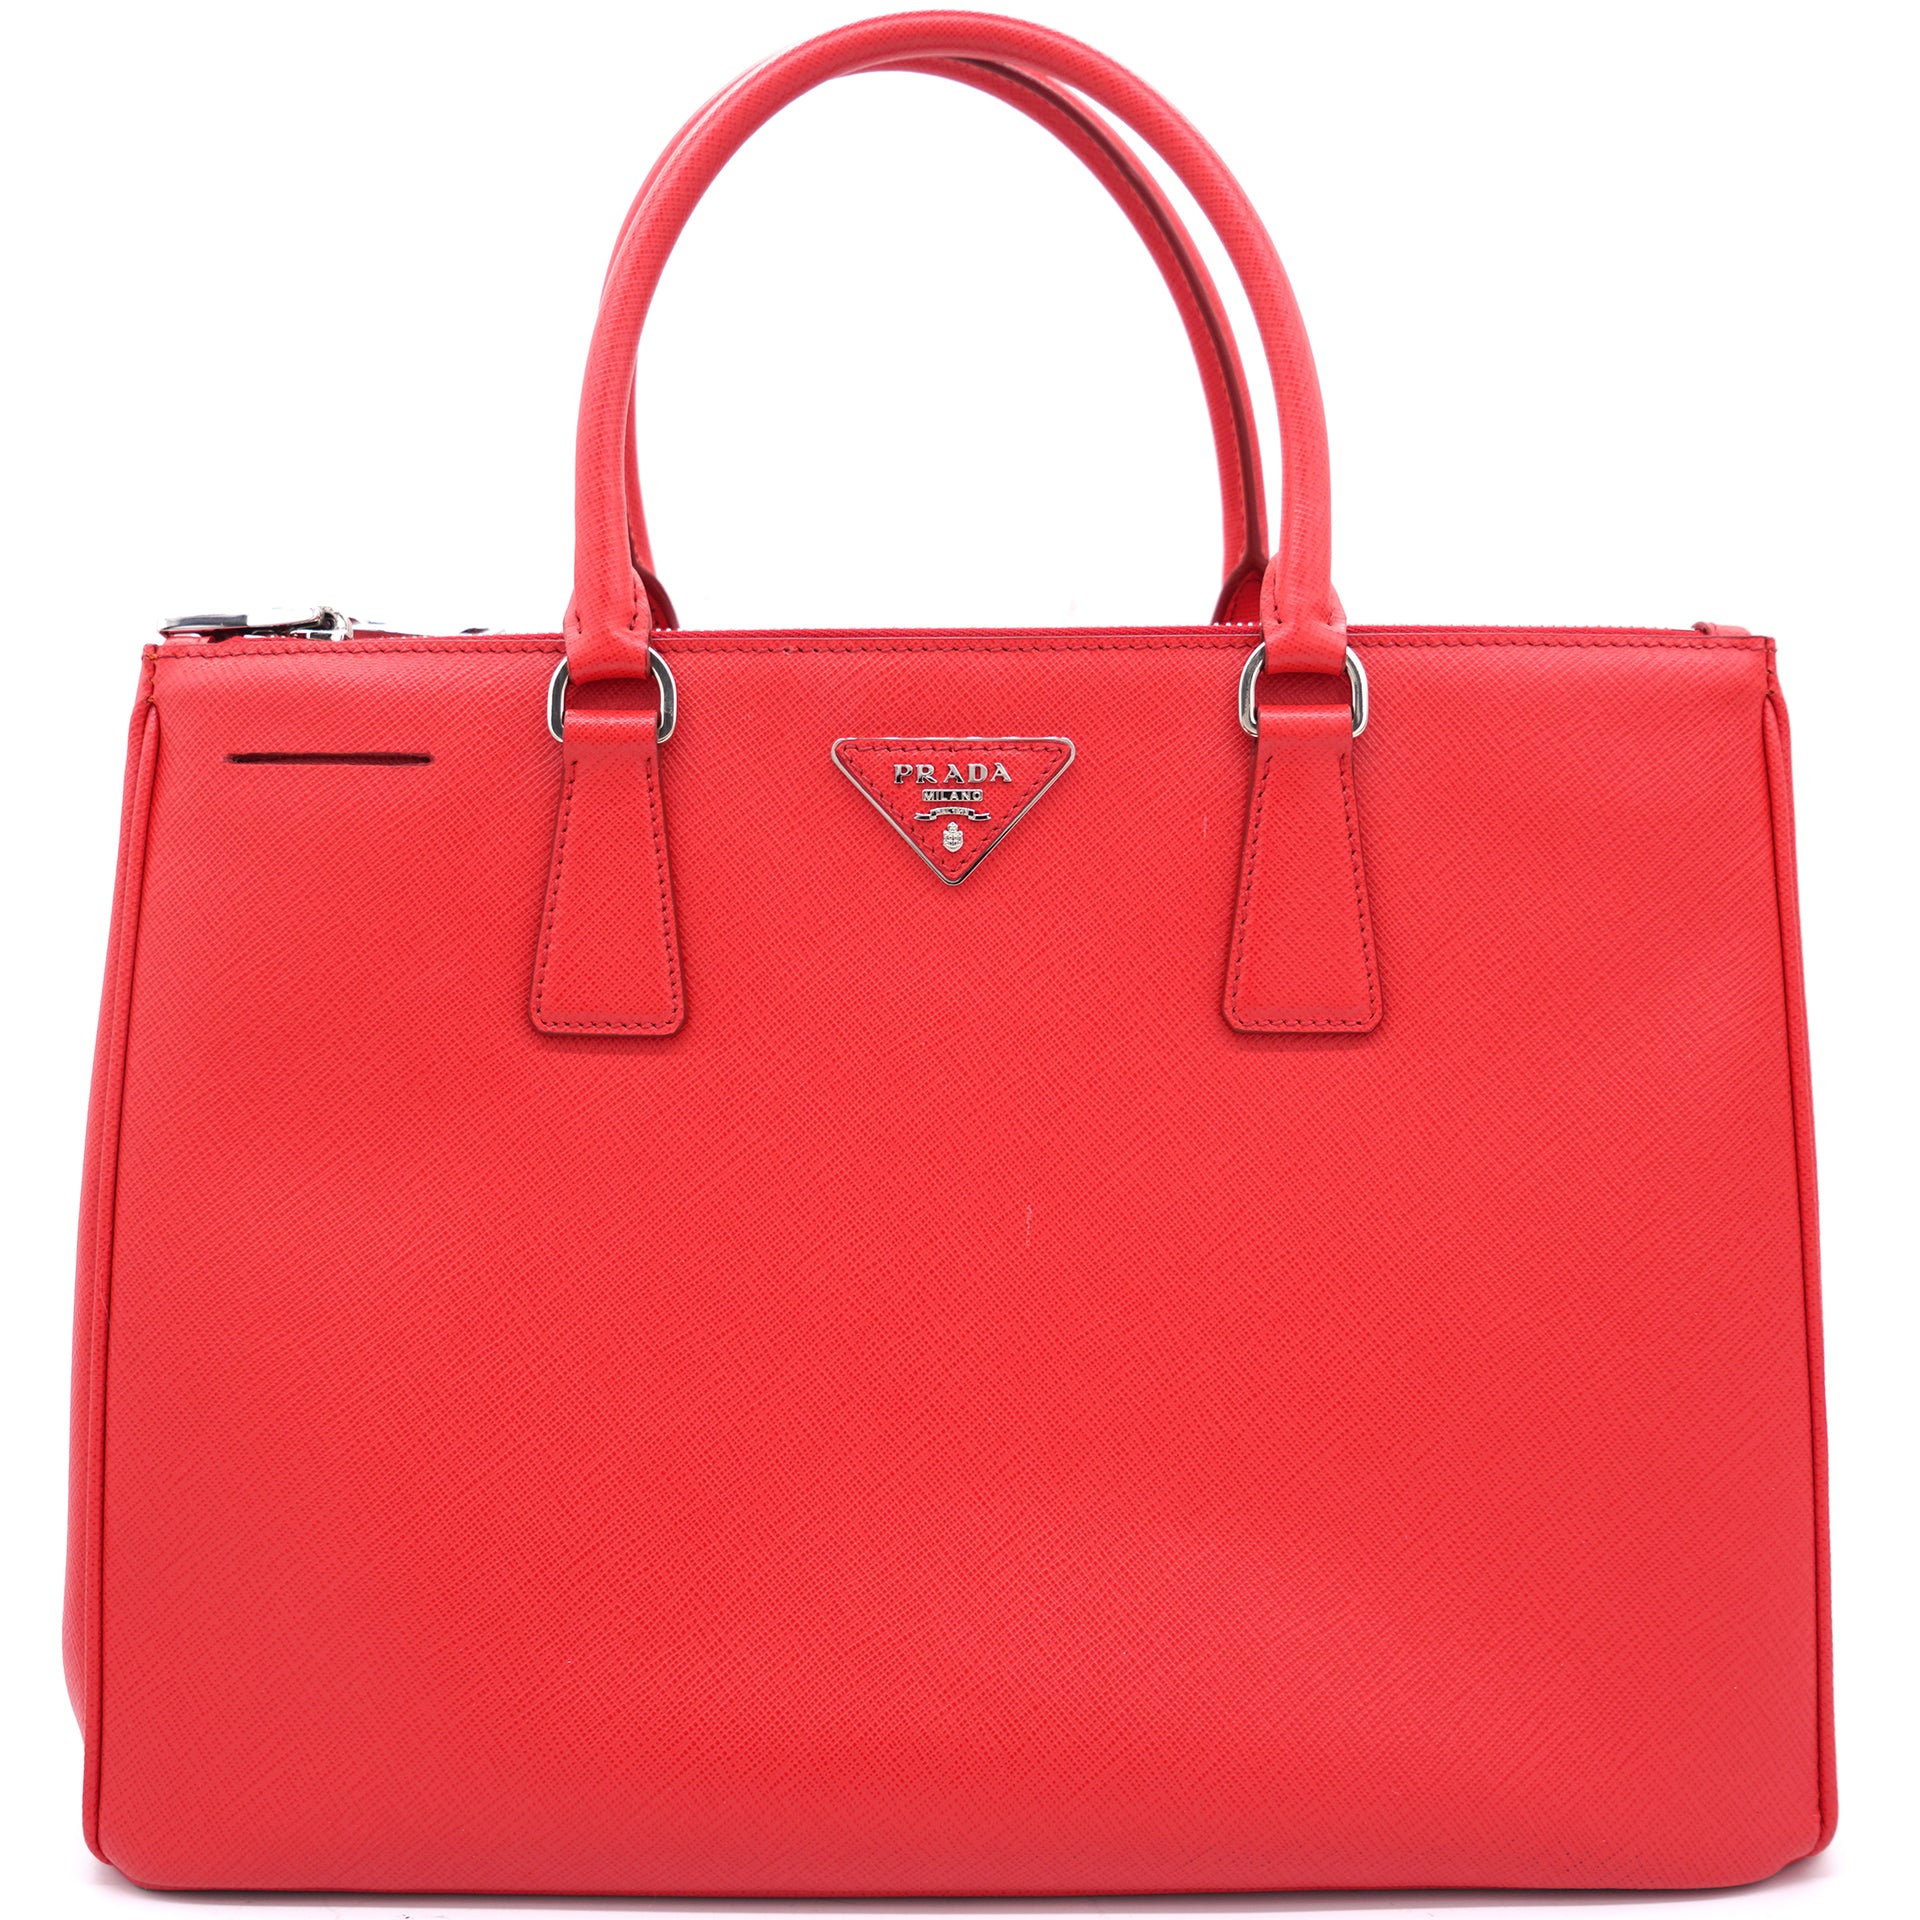 Buy Da Milano Red Leather Satchel Bag(LB-00441) at Amazon.in